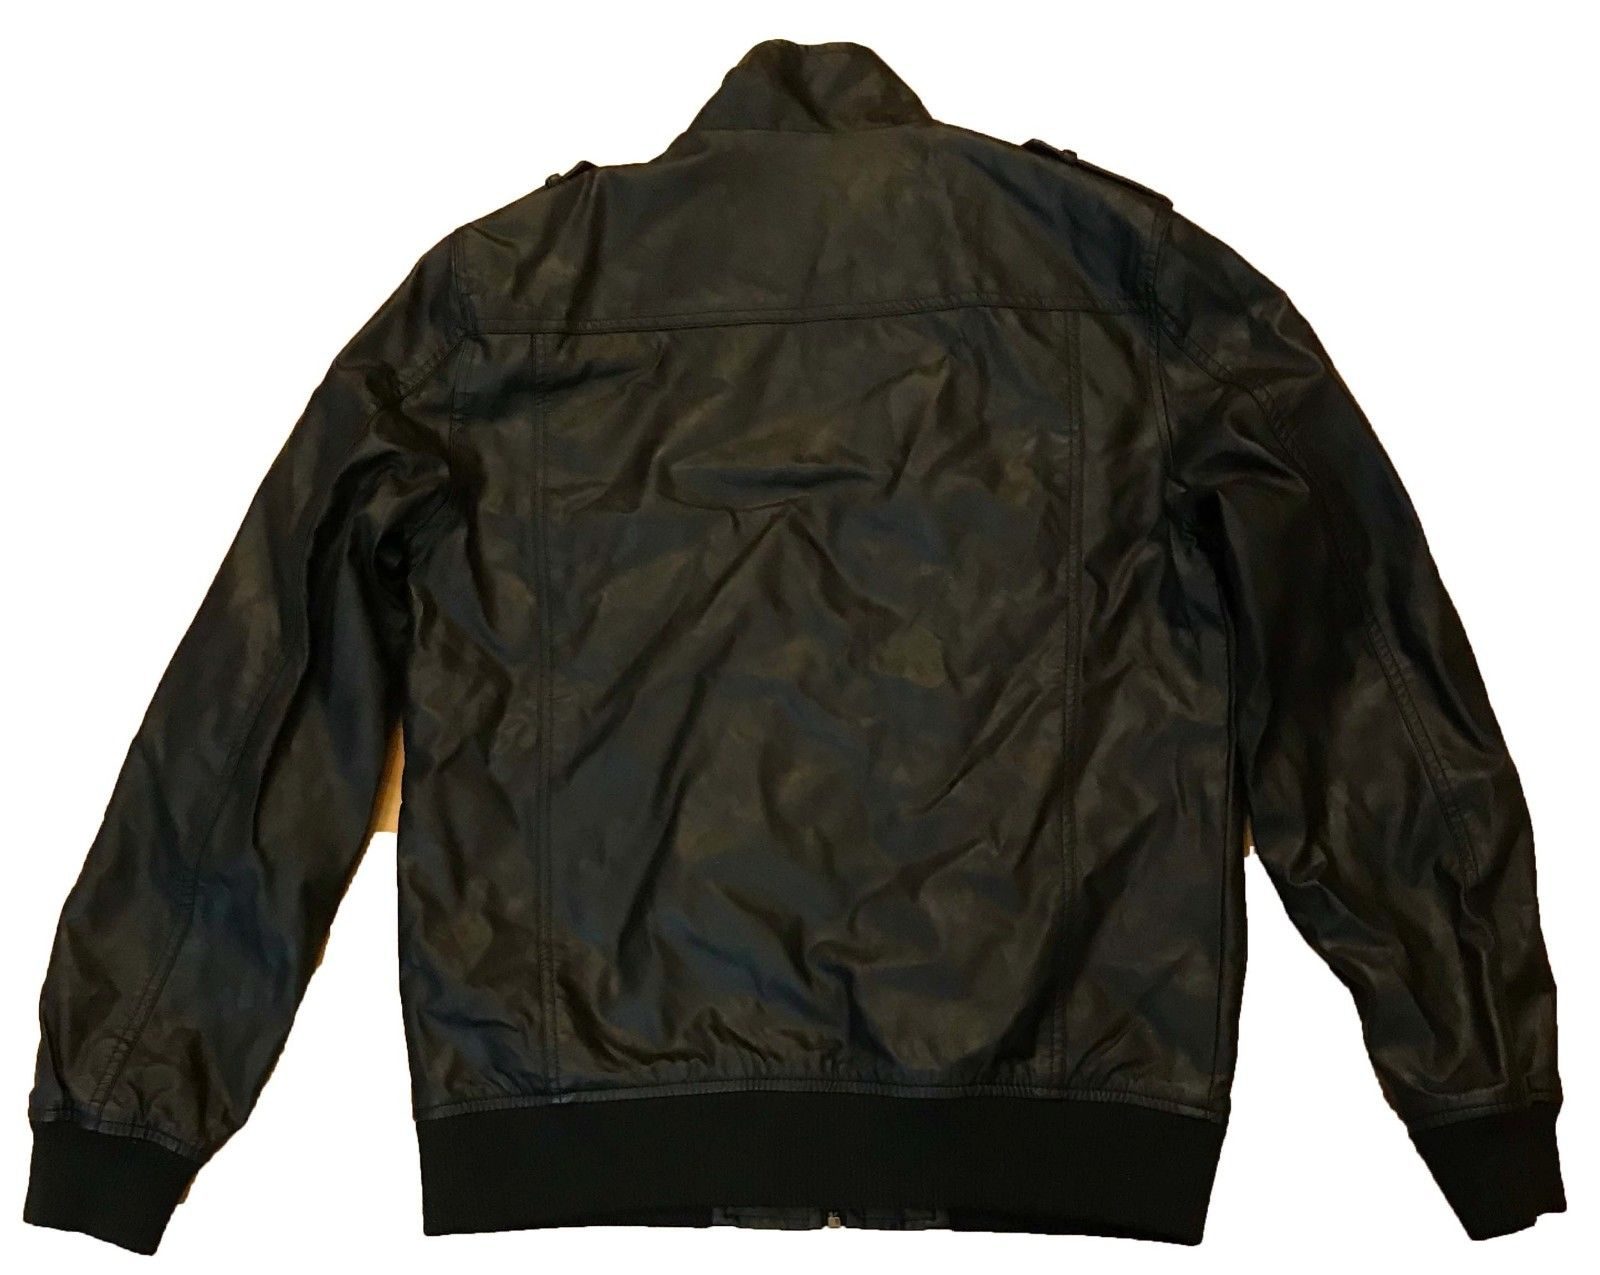 Men's Foreign Exchange Black Leather Jacket- A2 Jackets